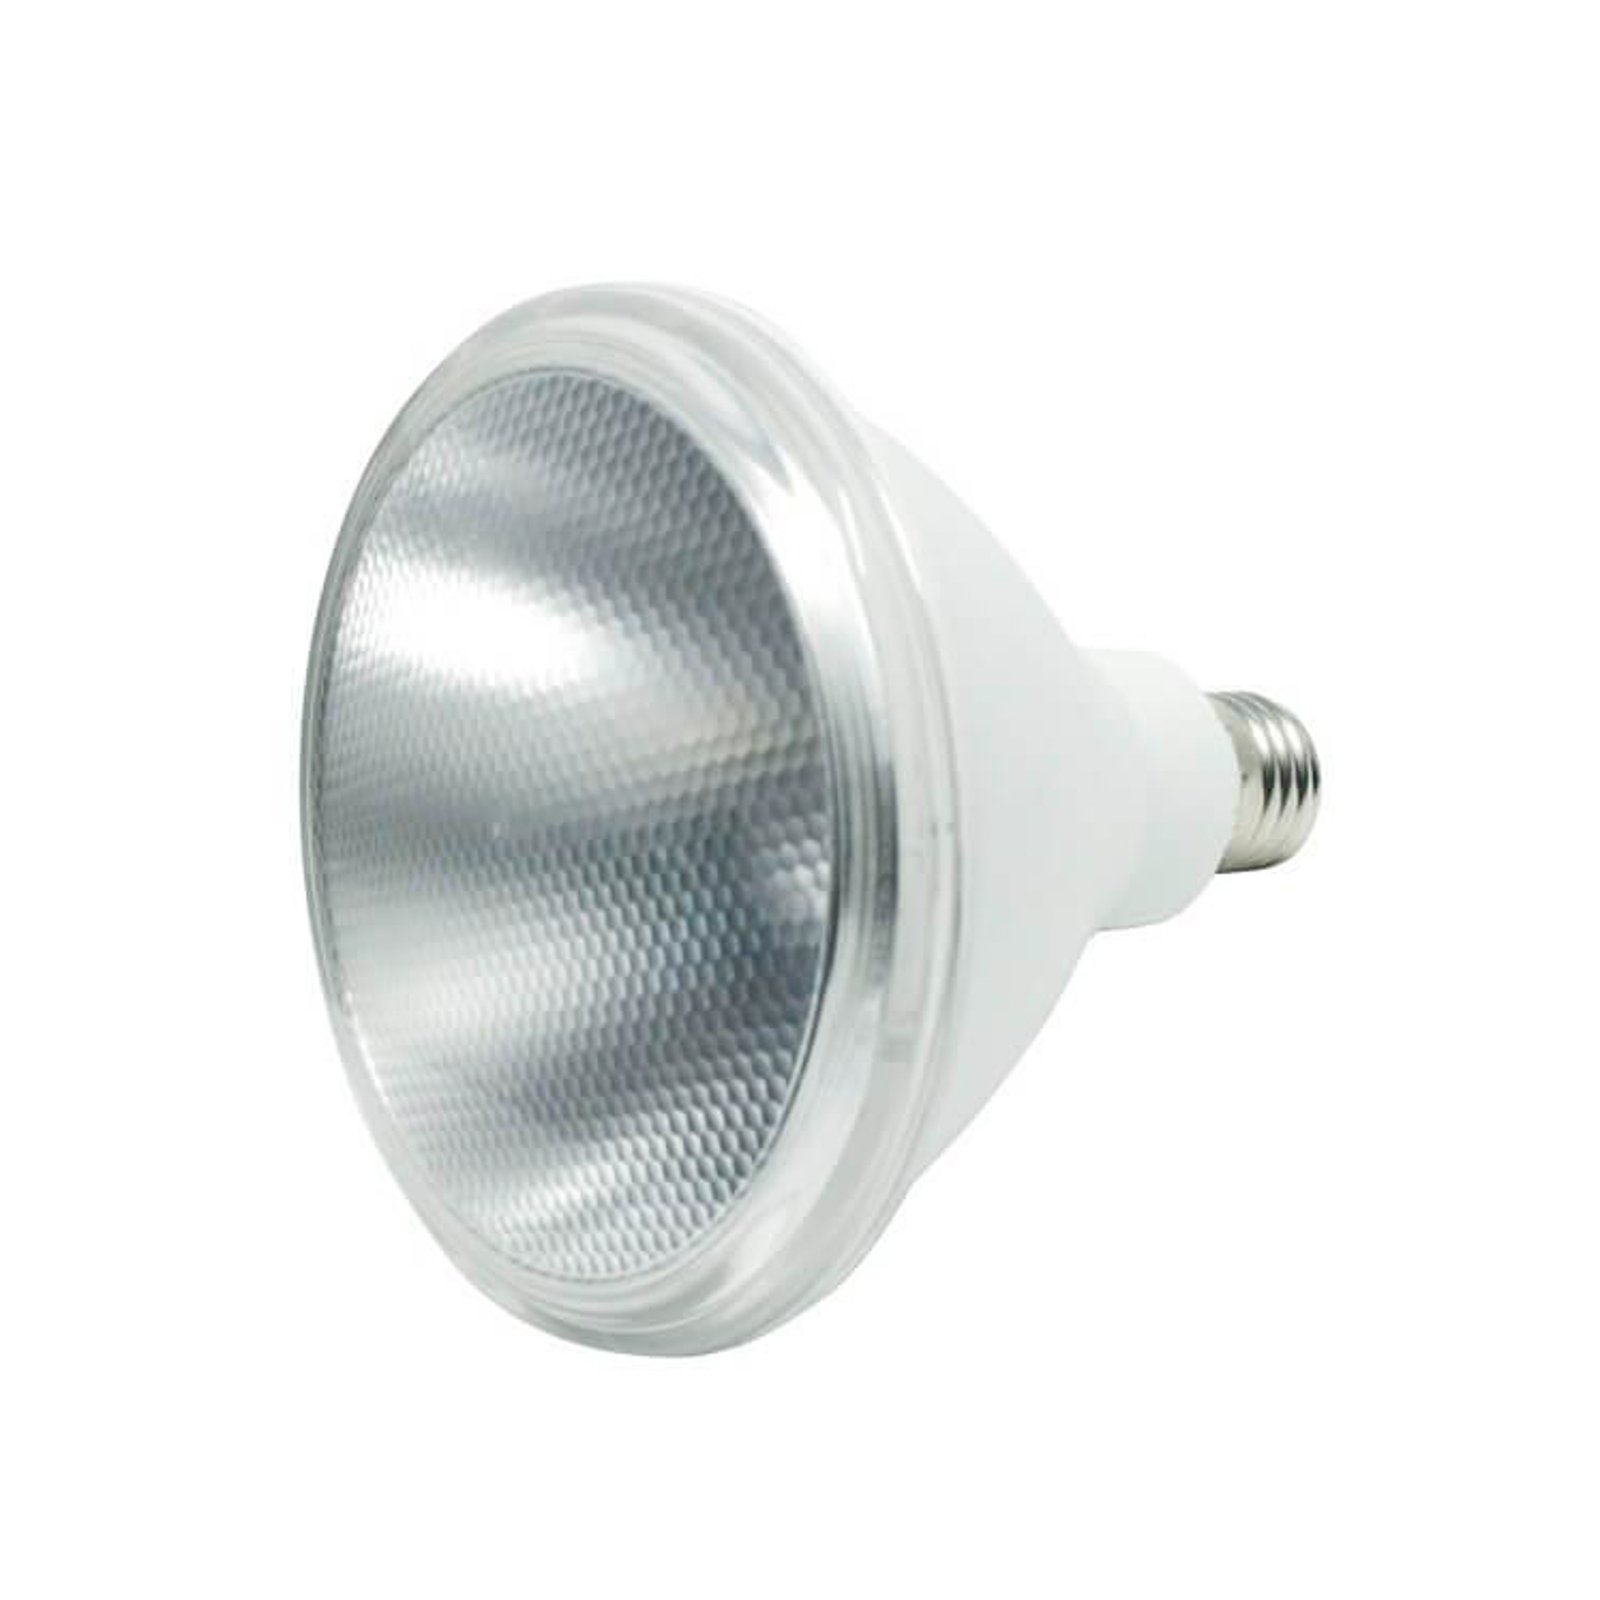 LED lamp reflector, 840, RODER, PAR38, E27, 15W